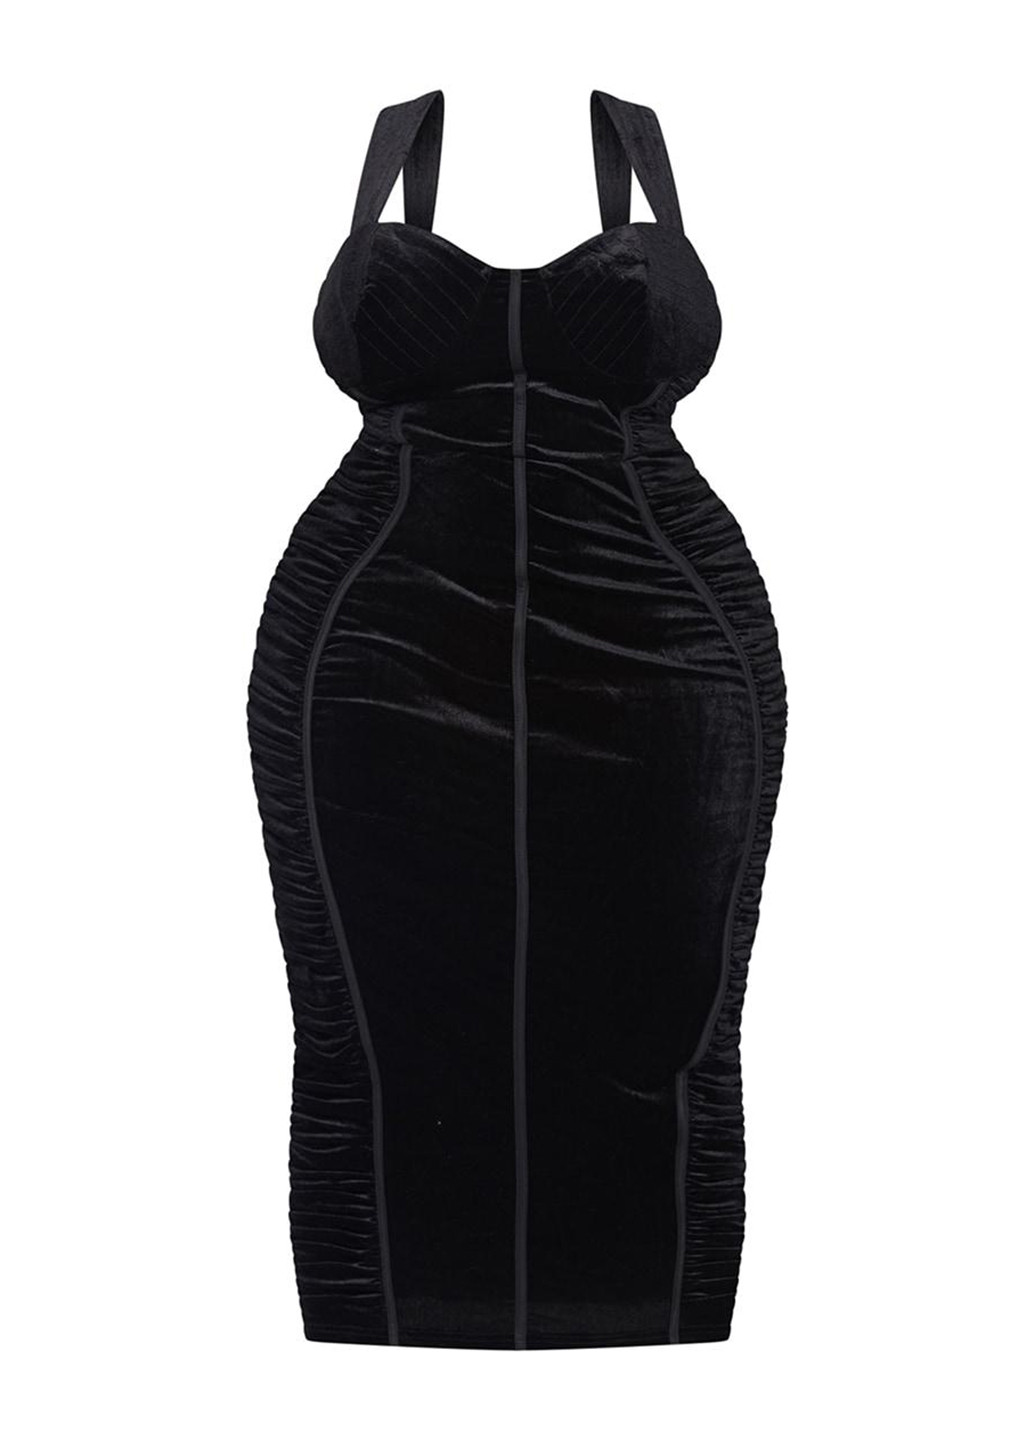 Черное вечернее платье футляр PrettyLittleThing однотонное